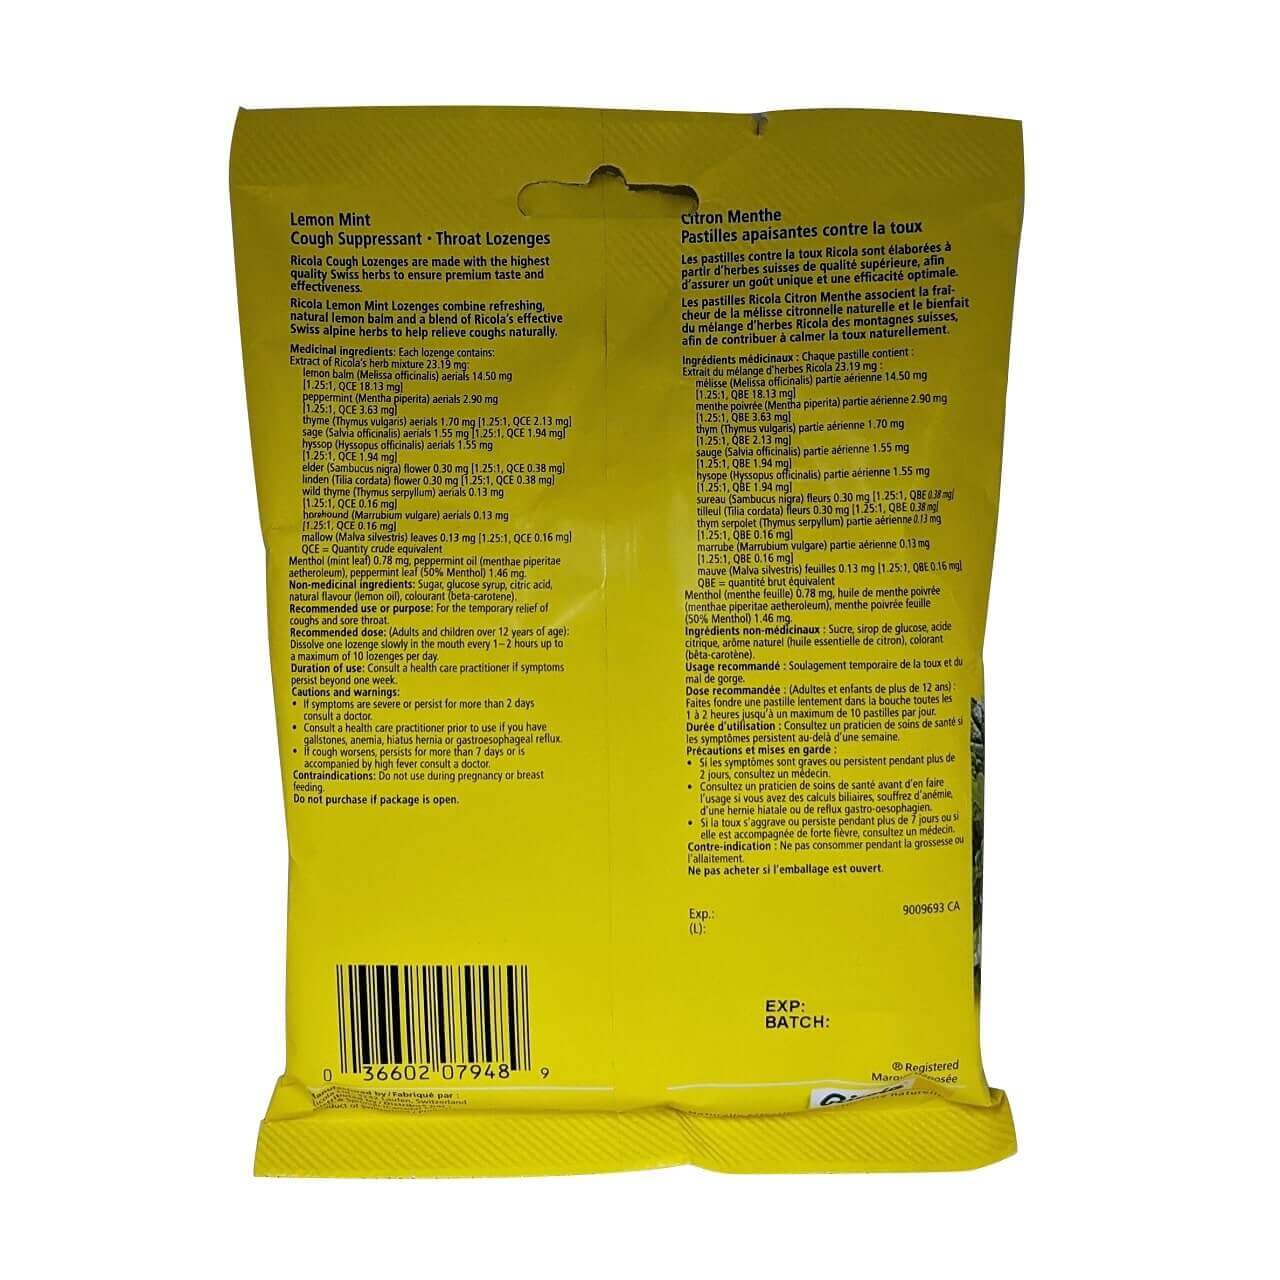 Description, dose, ingredients, warnings for Ricola Lemon Mint (19 lozenges)